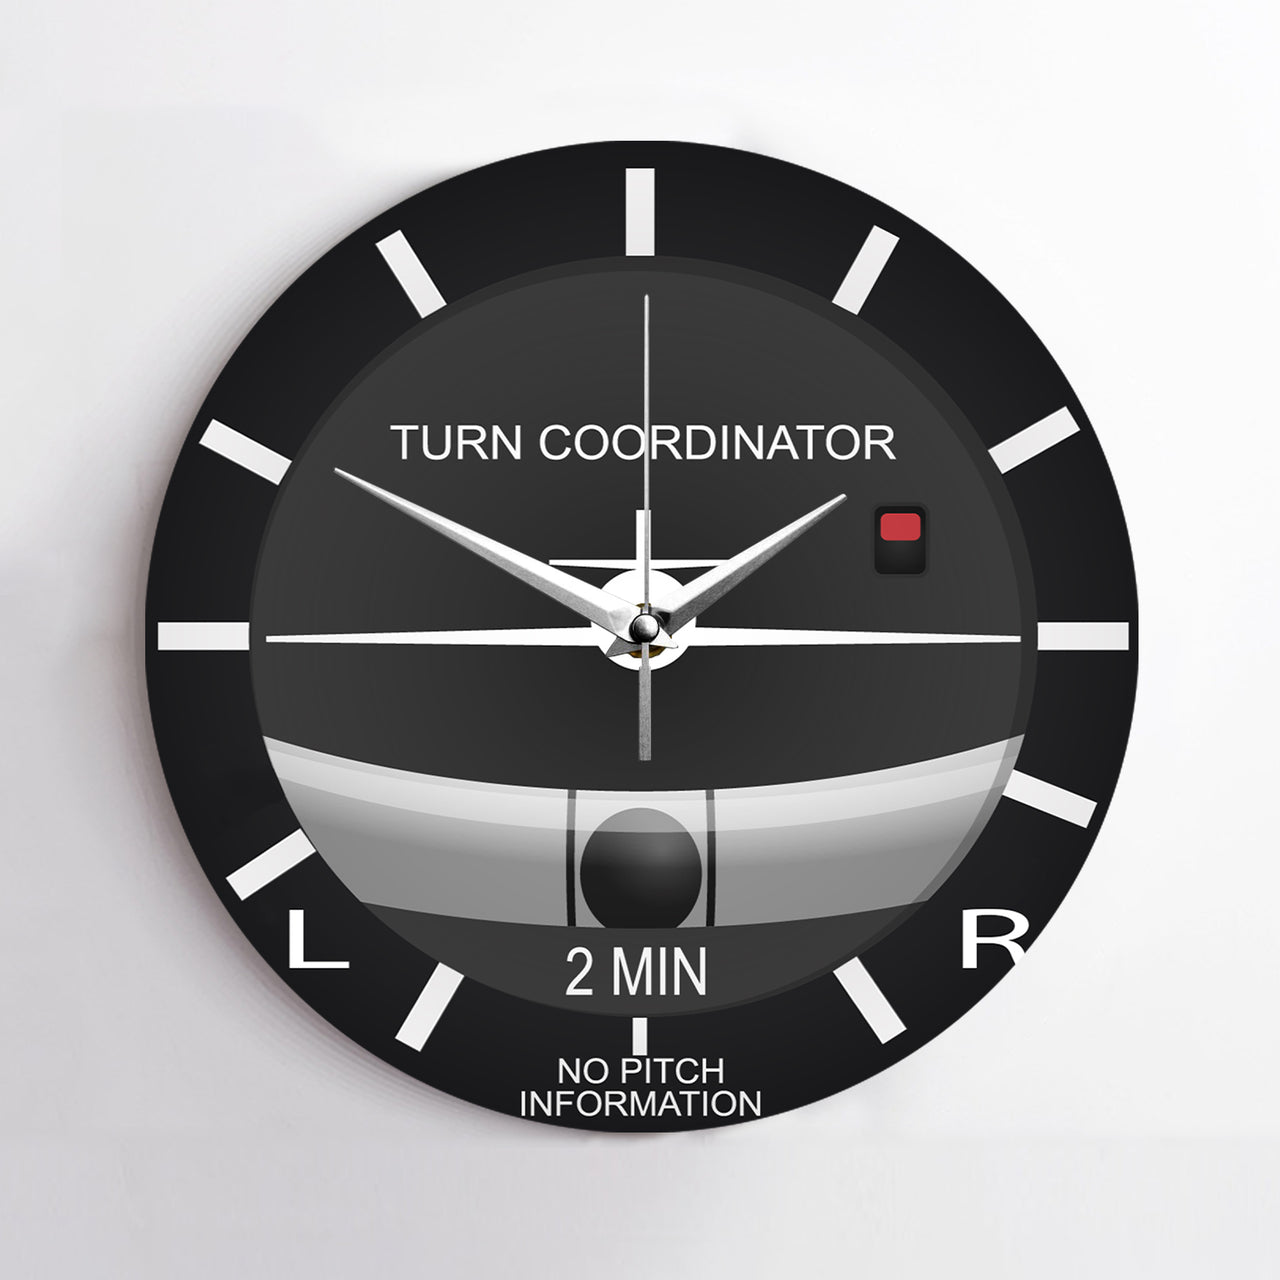 Airplane Instruments (Turn Coordinator) Designed Wall Clocks